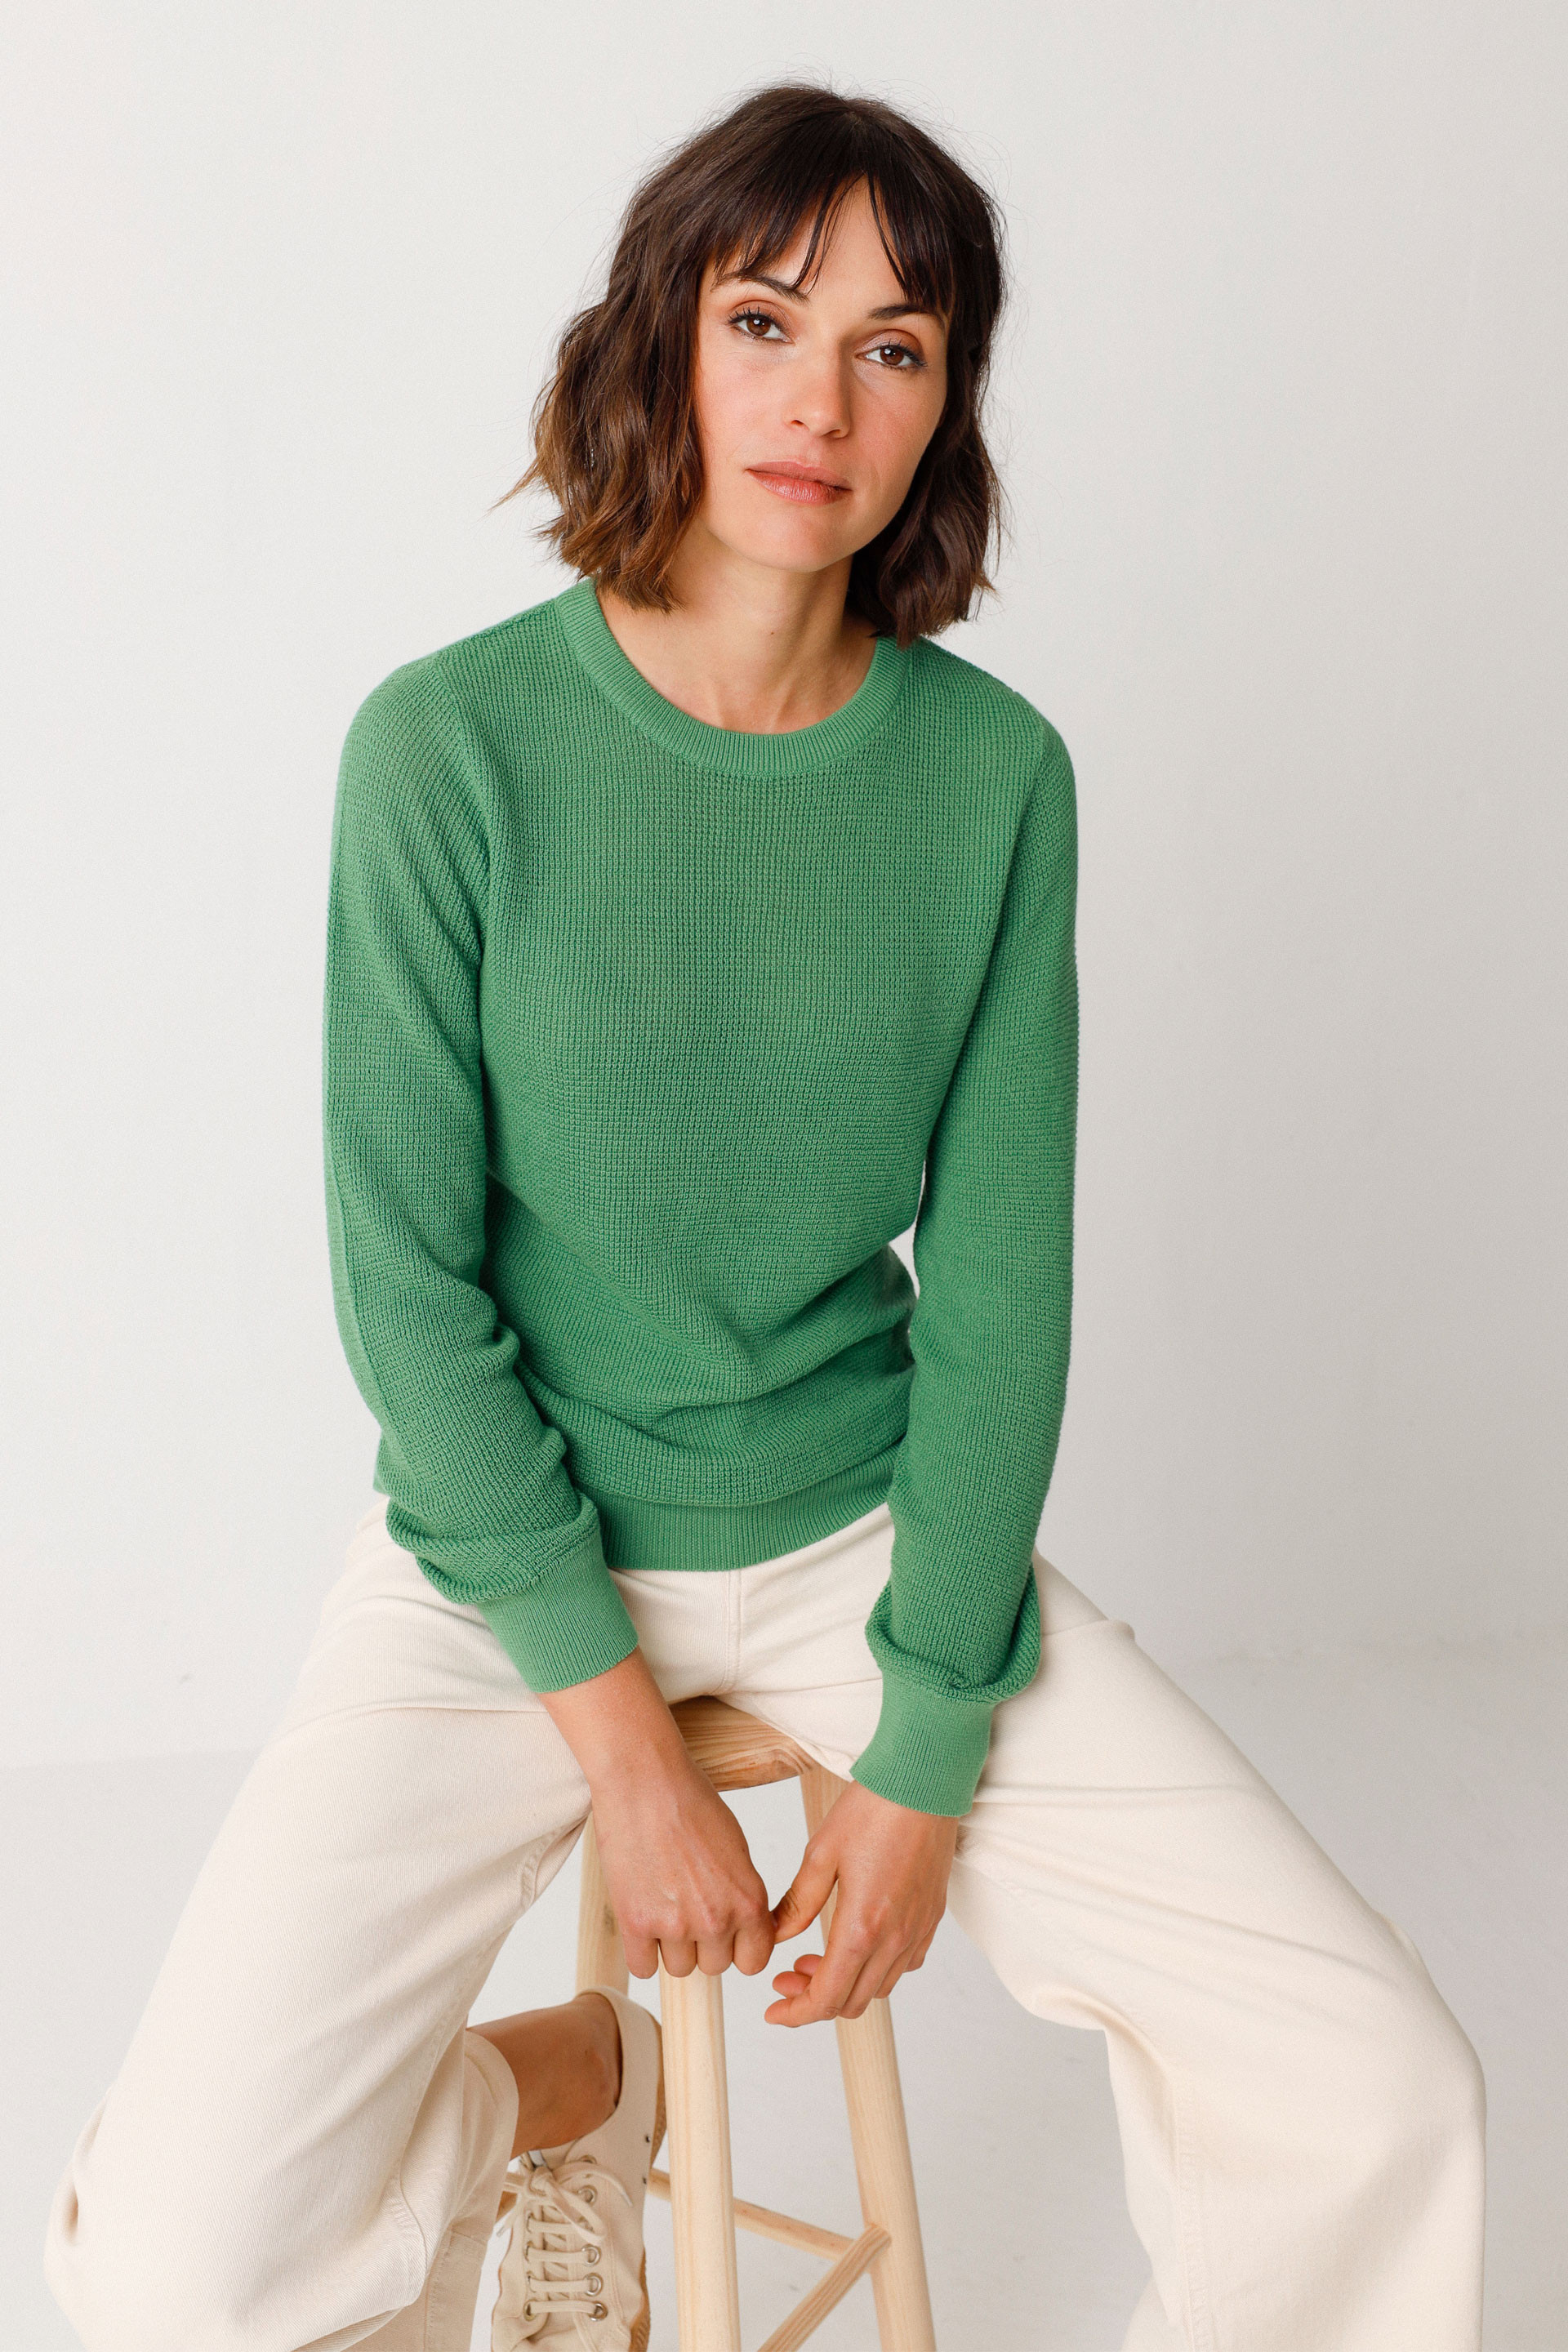 Organic cotton sweaters